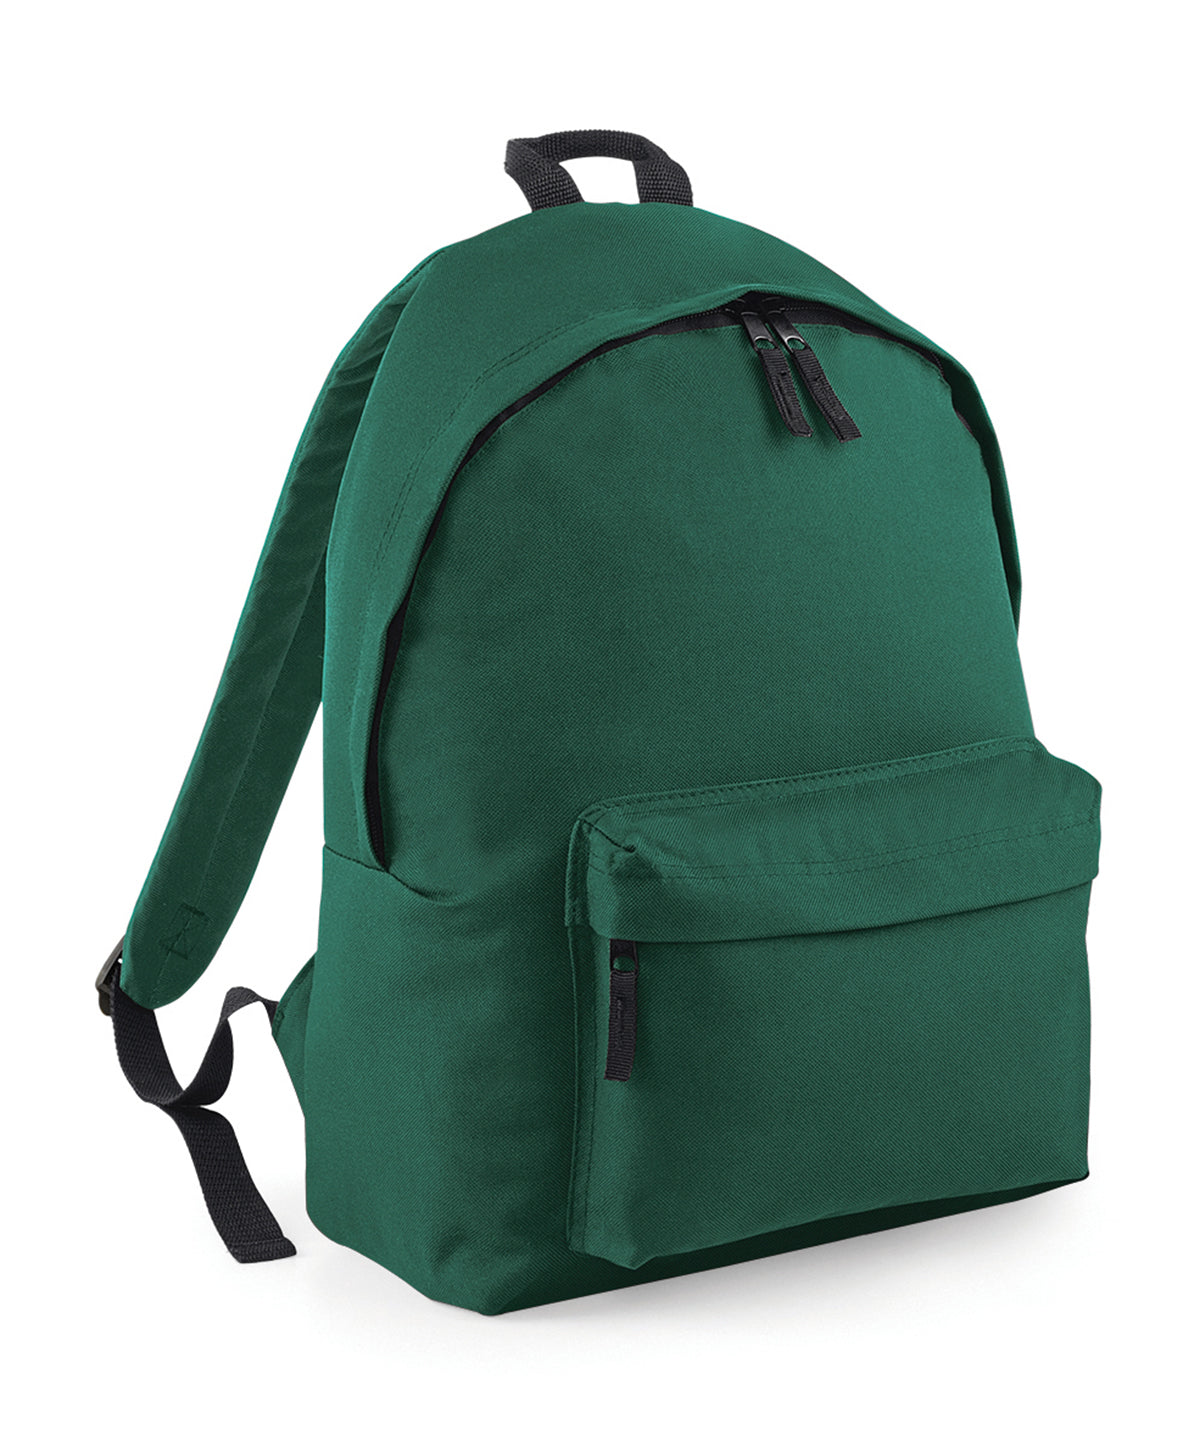 Personalised Bags - Bottle Bagbase Original fashion backpack